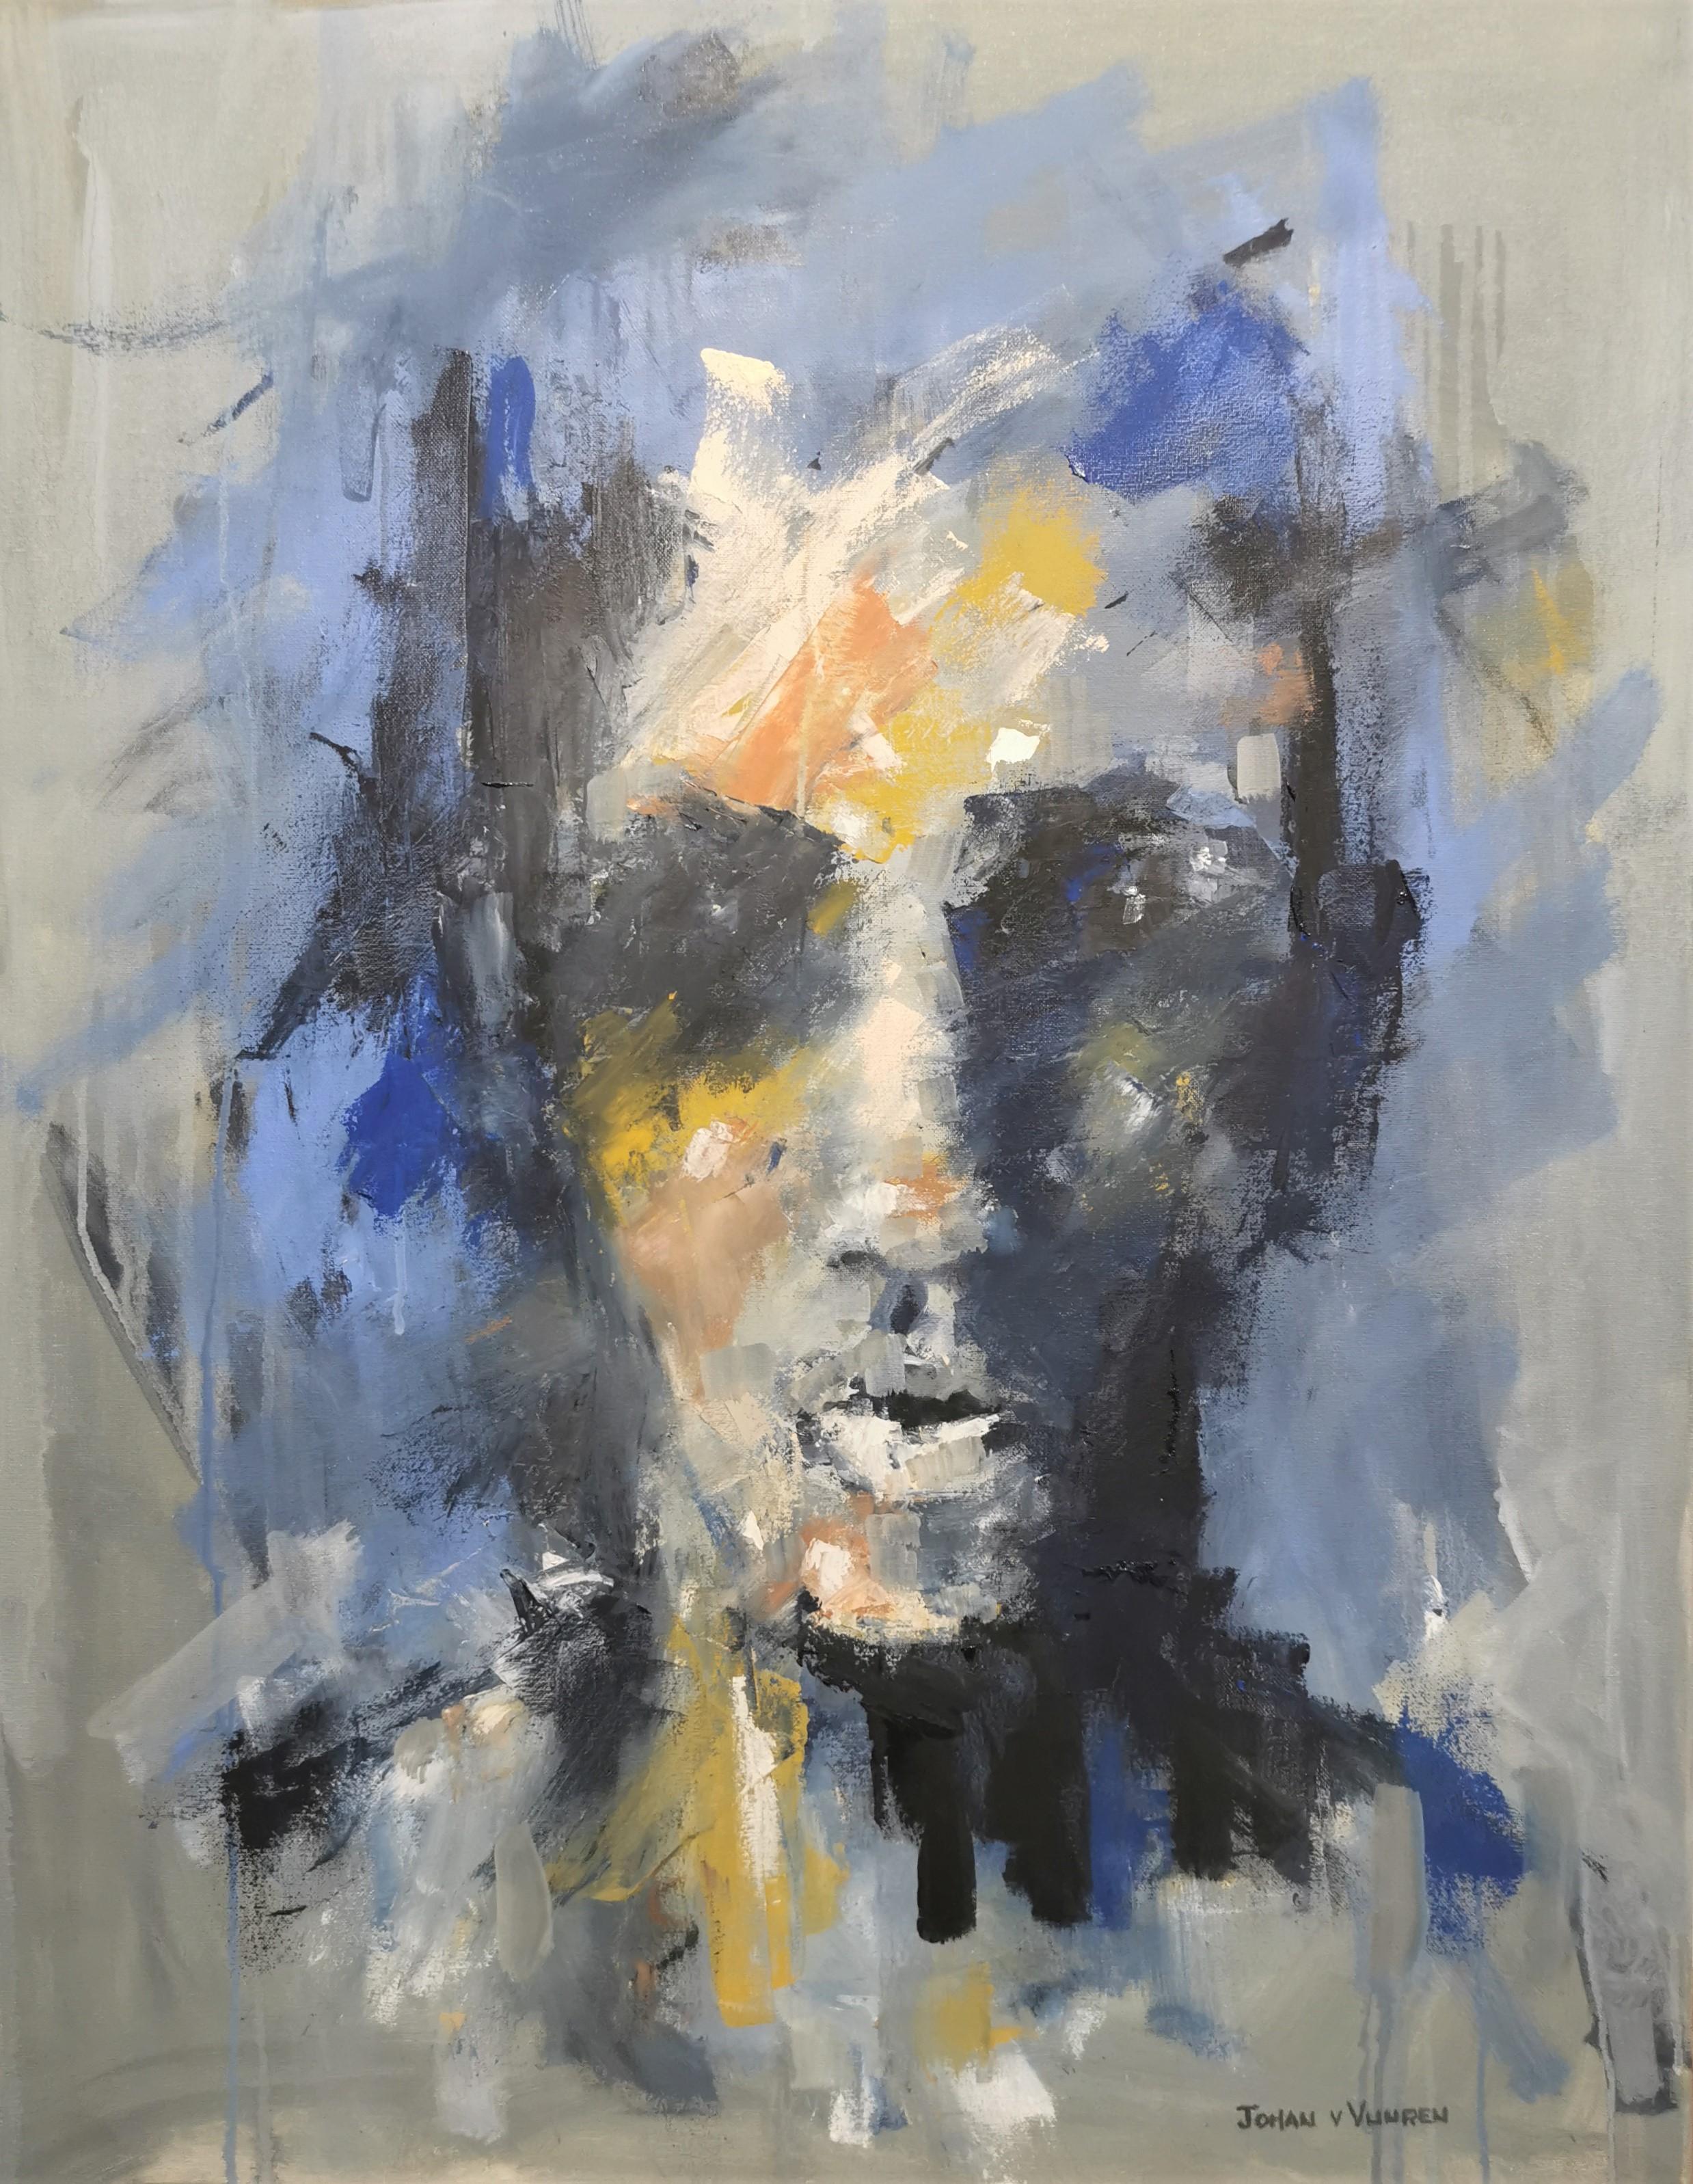 Johan van Vuuren Abstract Painting - Oil on Canvas Expressive Blue Portrait 